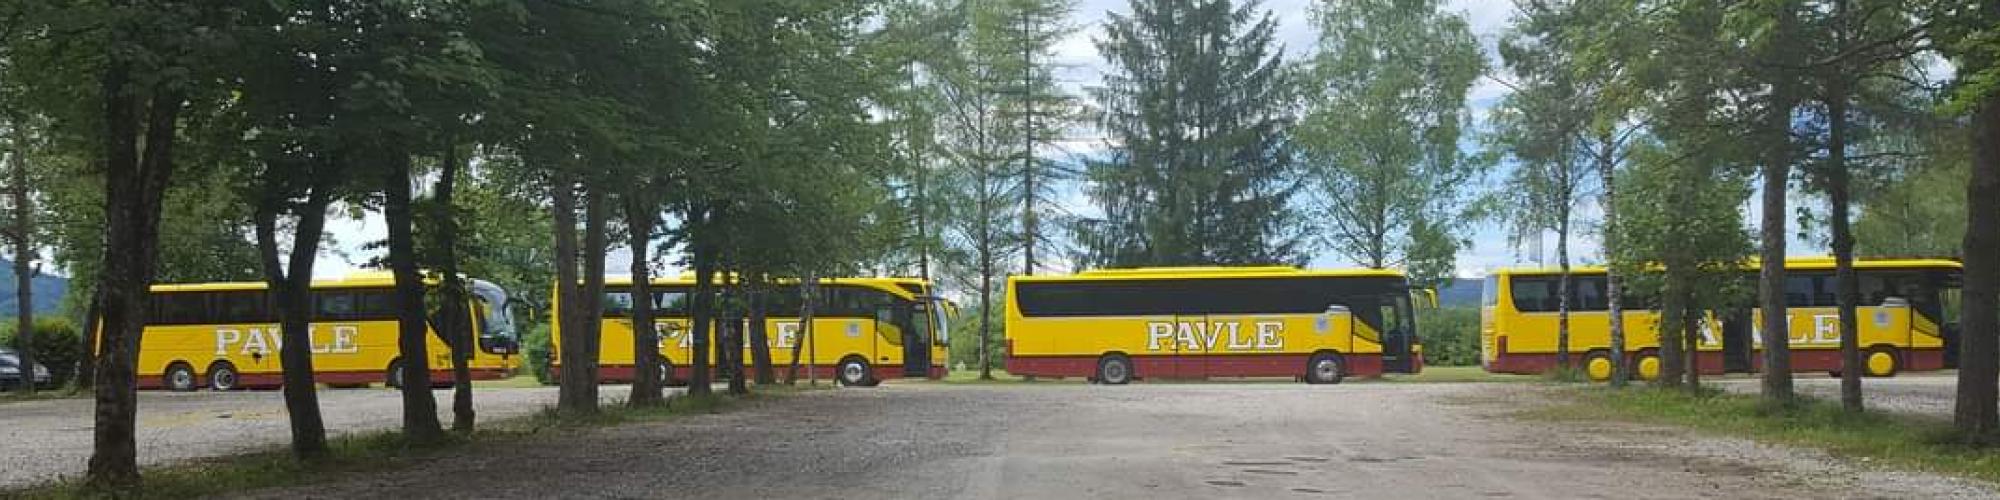 Pavle Reisen Omnibusunternehmen